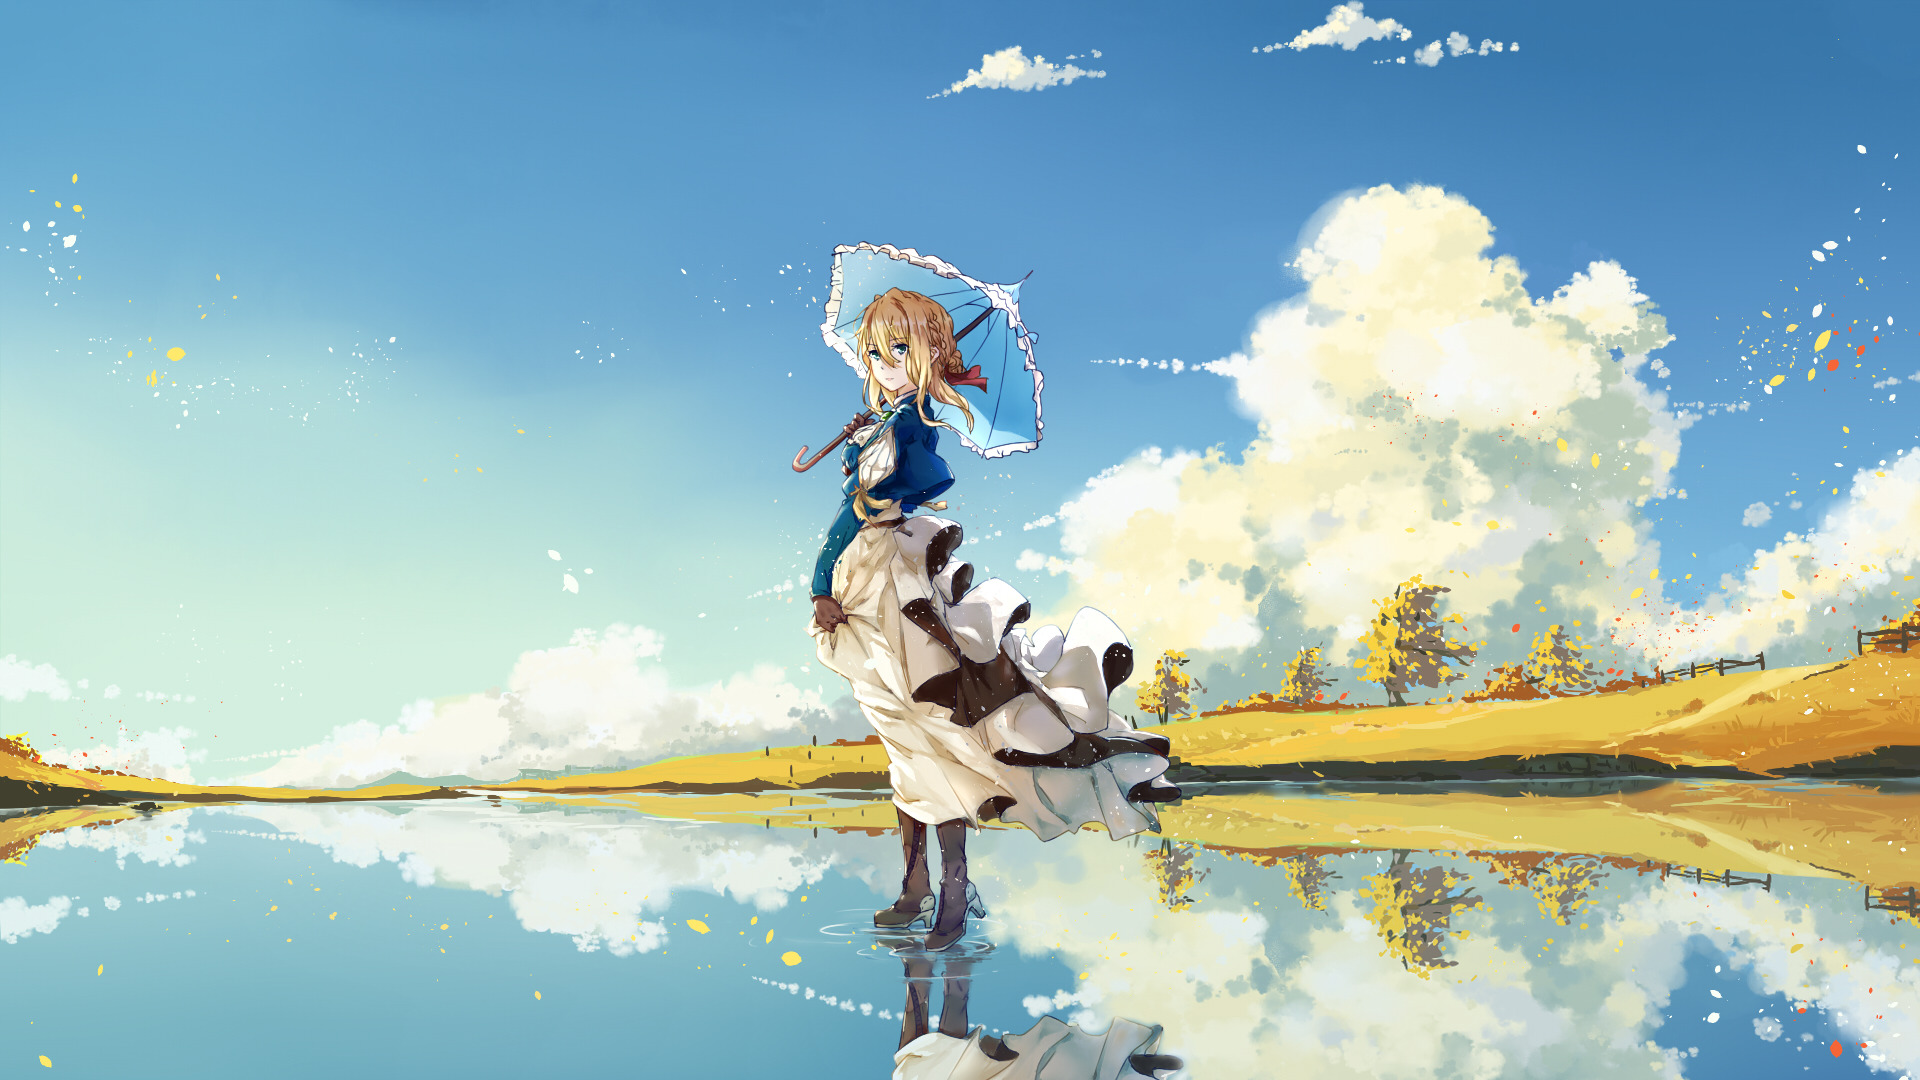 Download 1920x1080 wallpaper  beautiful anime  girl 